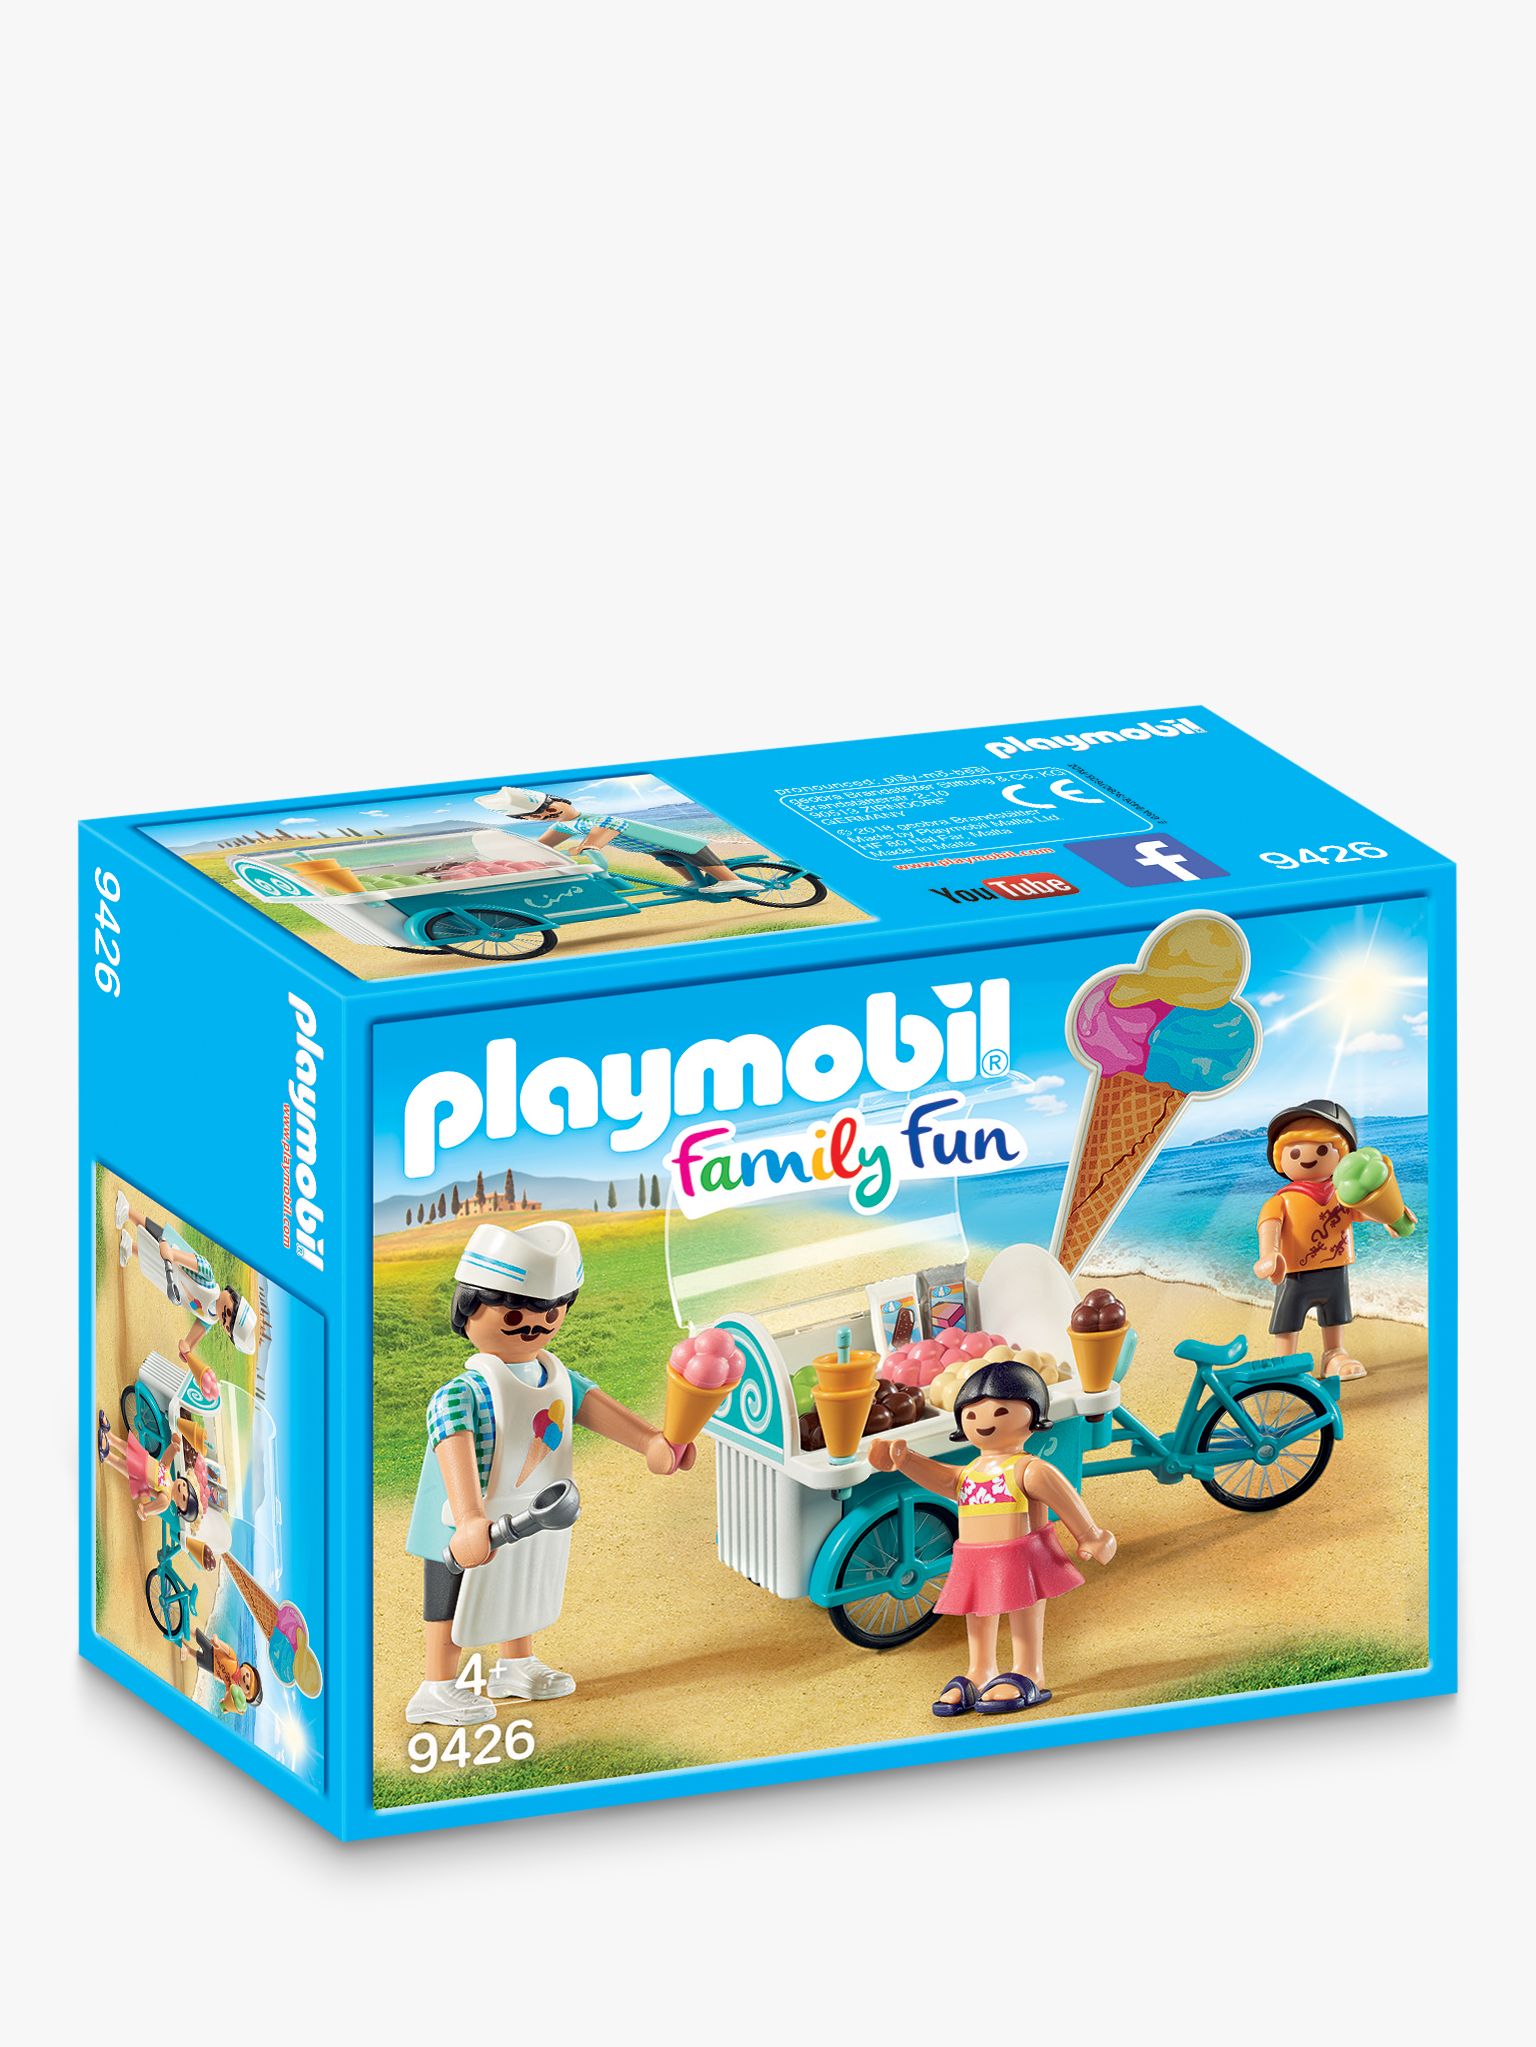 playmobil family